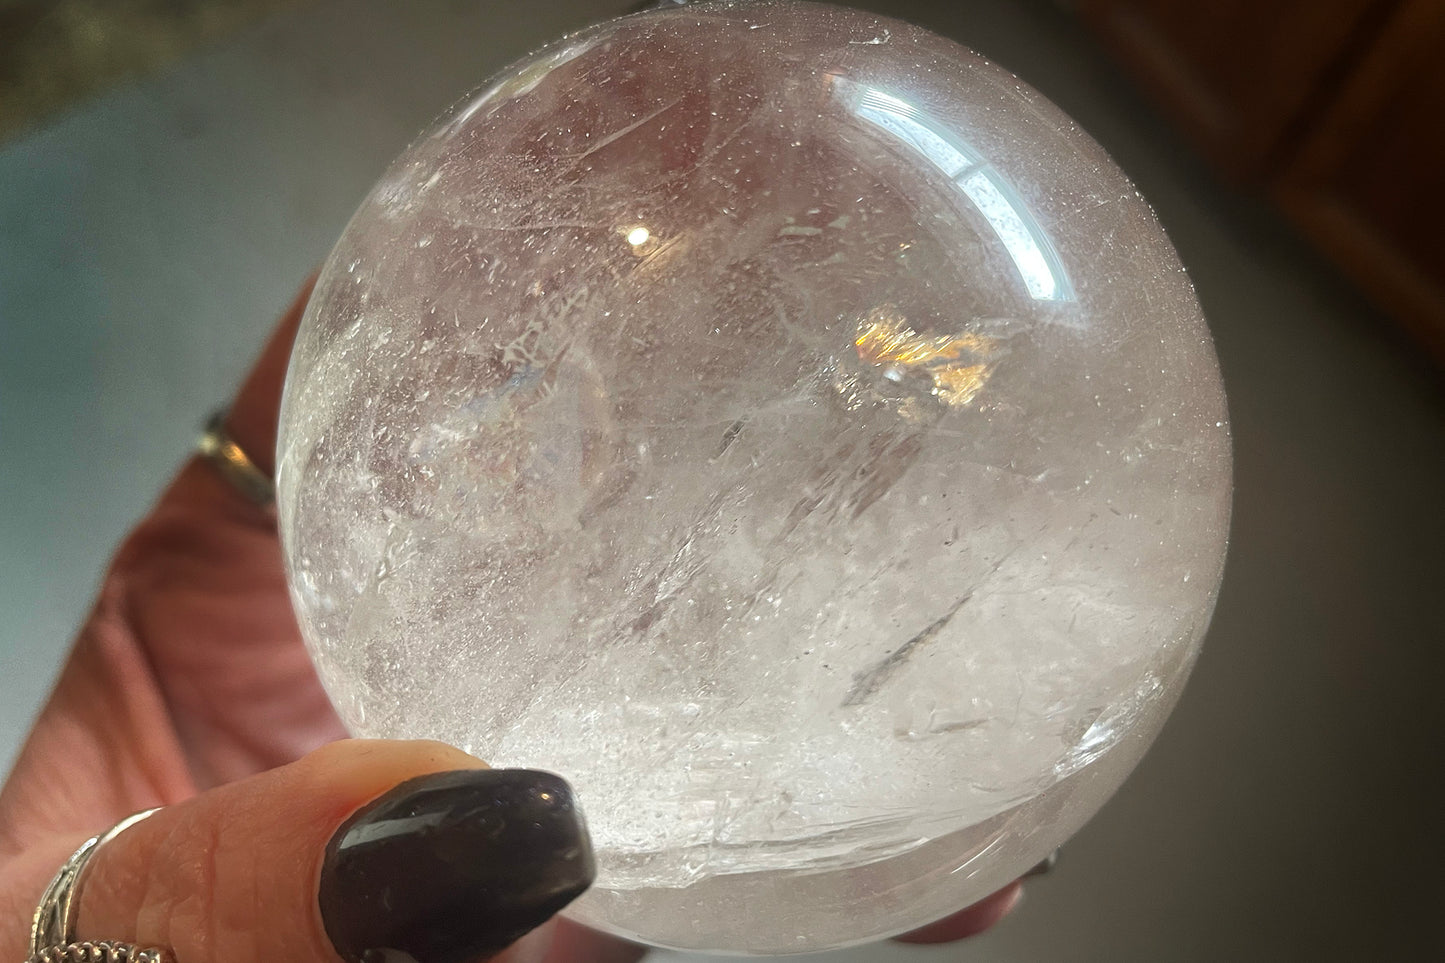 Crystal Ball Gazing Sphere